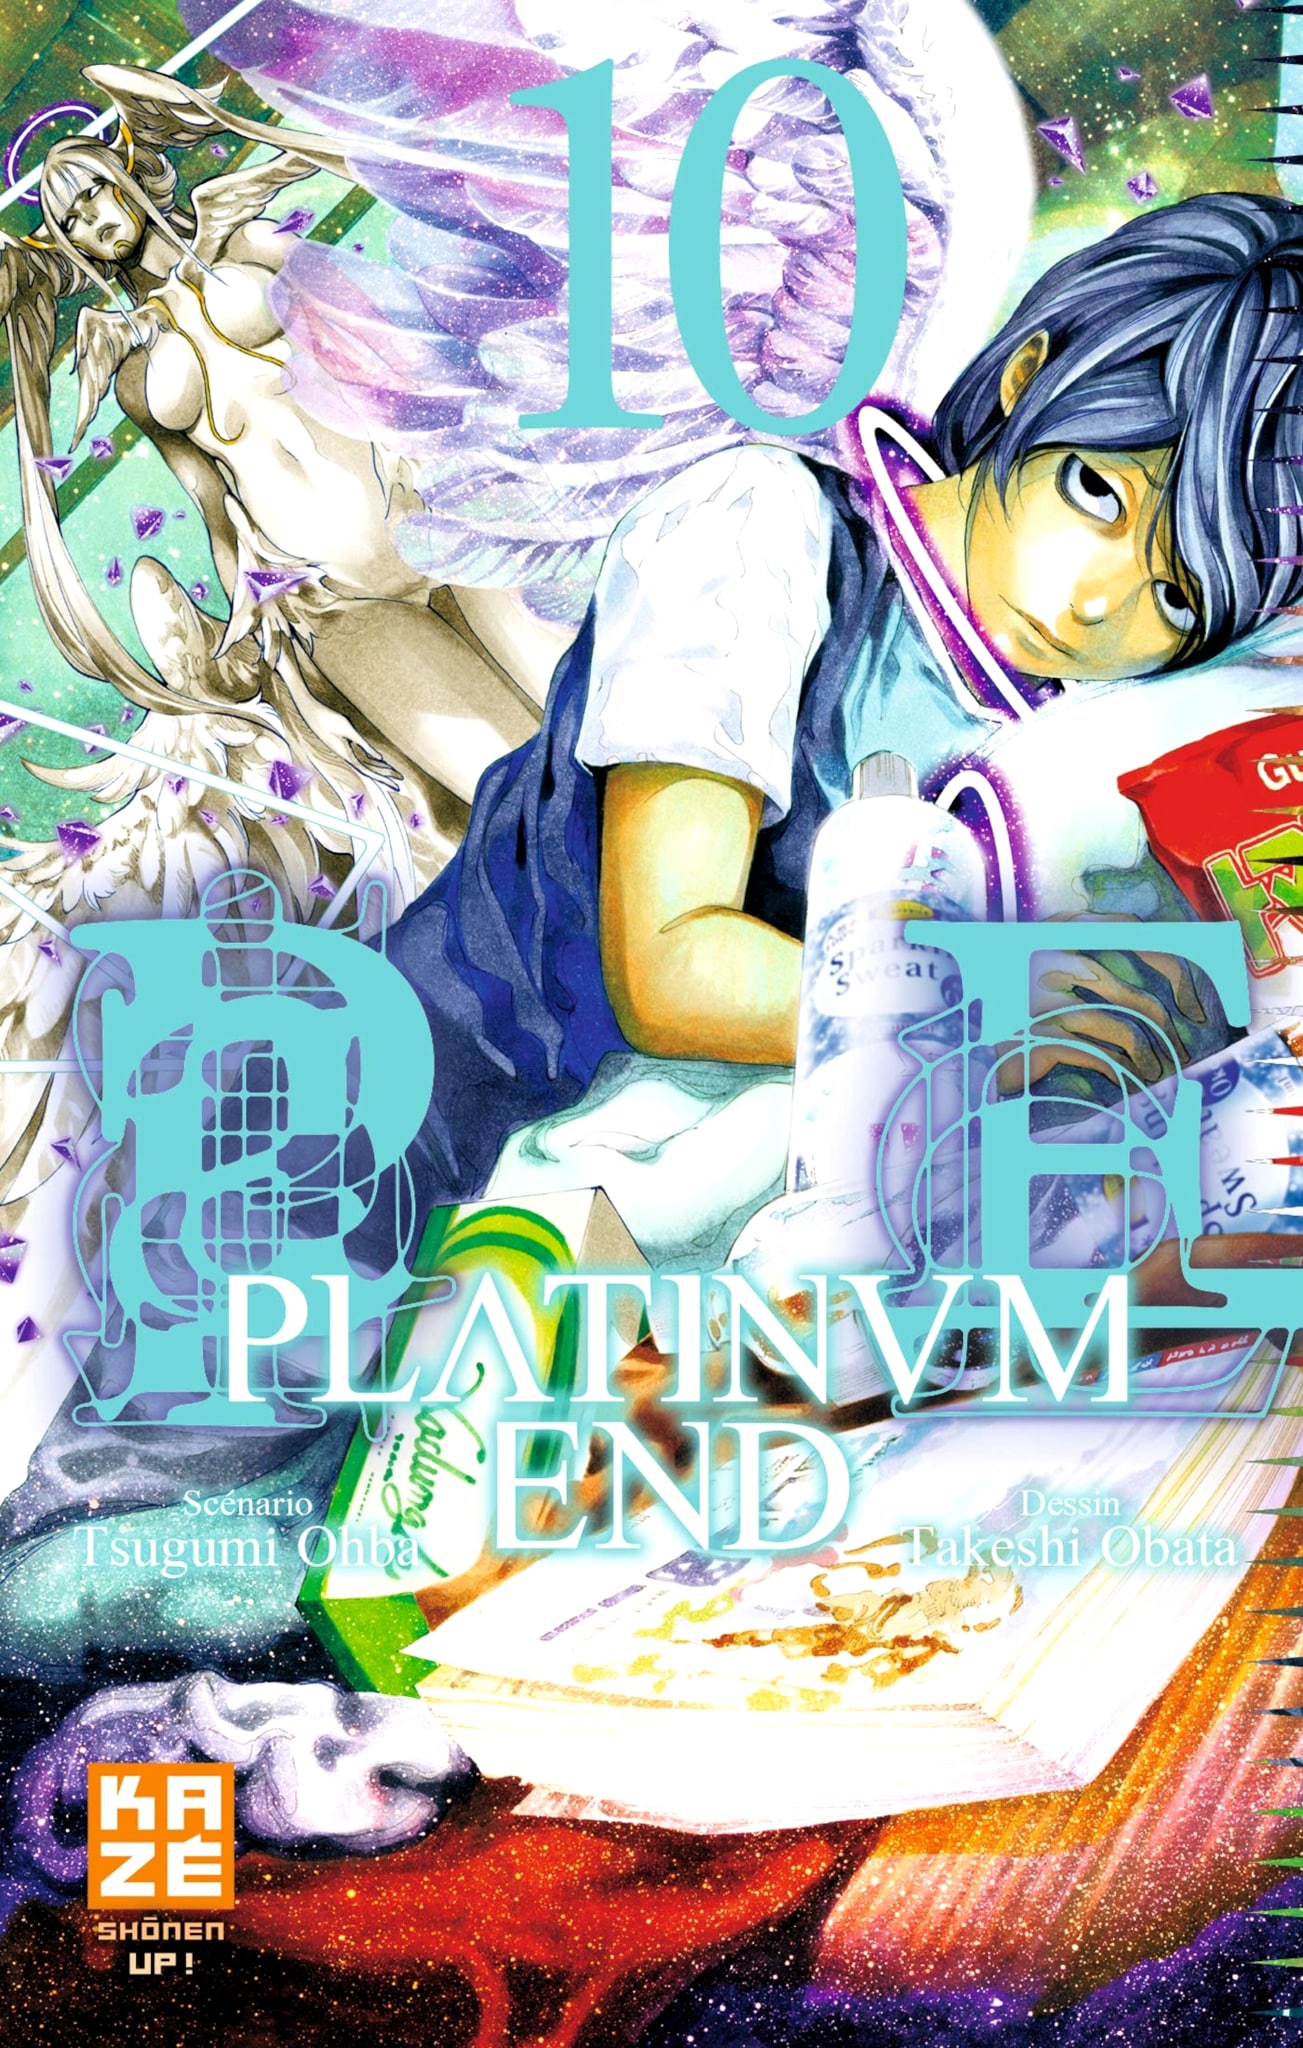 Tome 10 du manga Platinum End